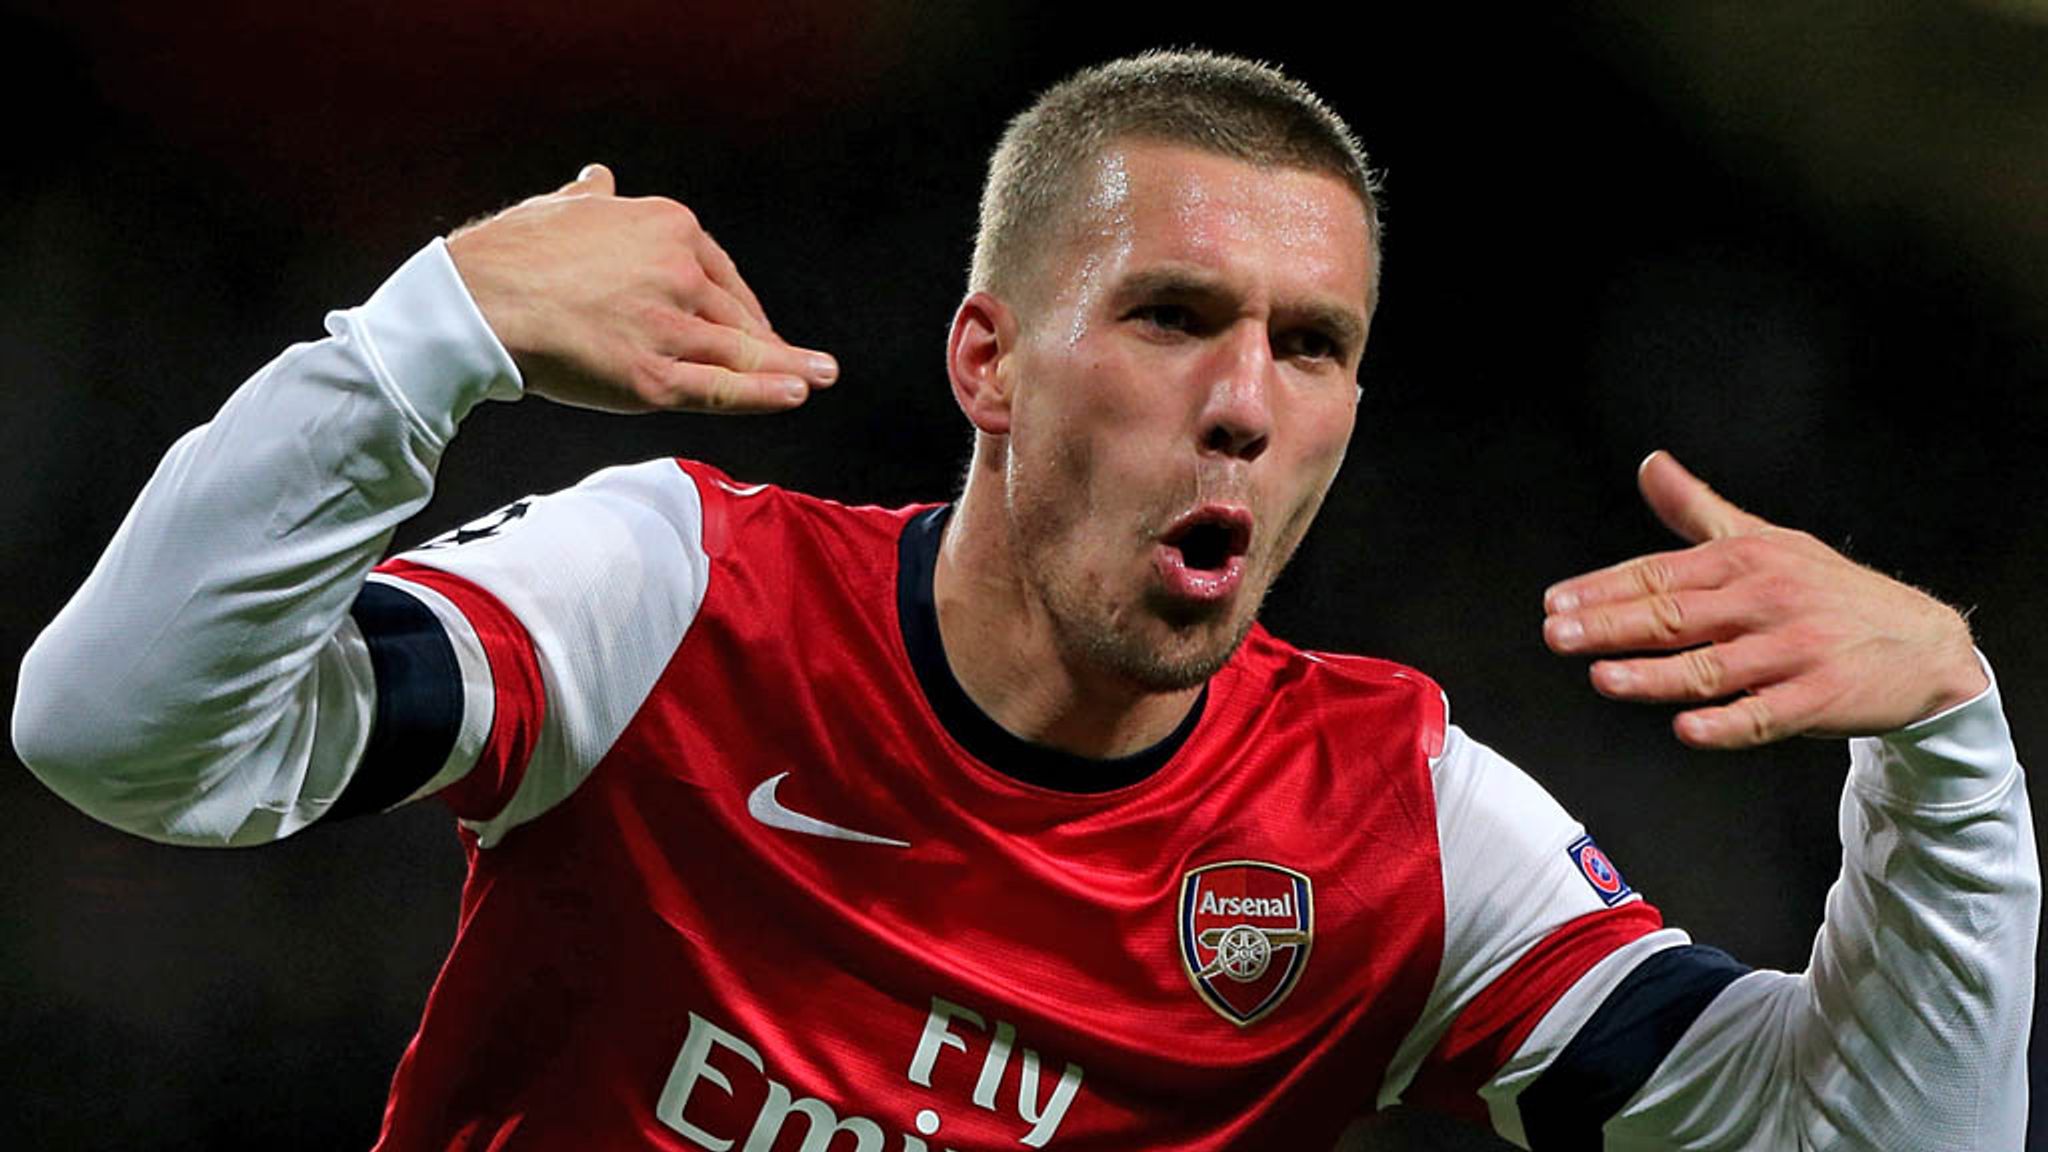 Arsenal striker Lukas Podolski confident of success against old club Bayern Munich | Football News | Sky Sports